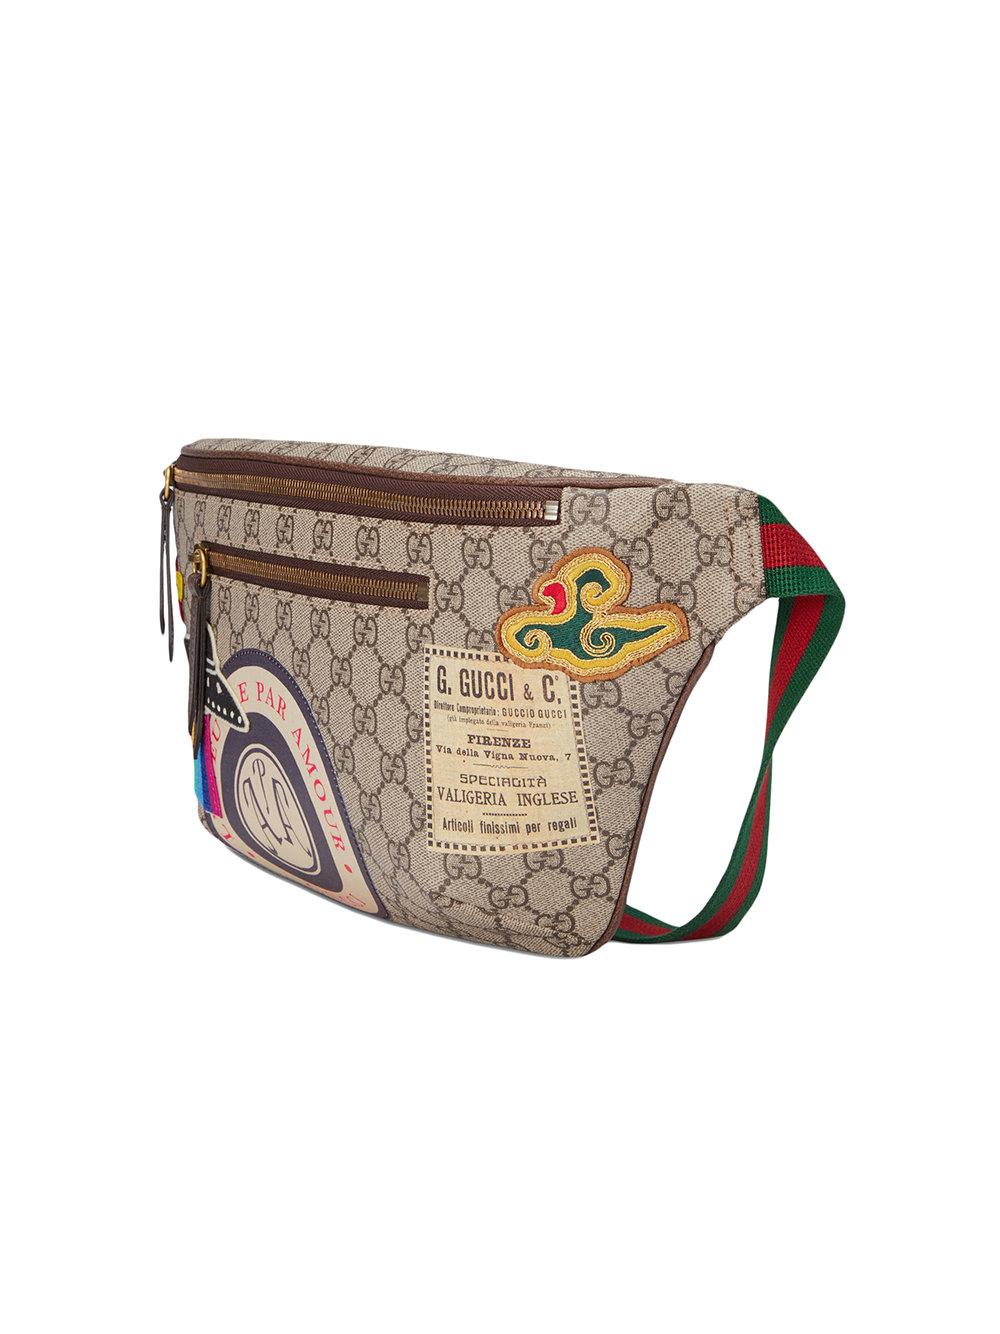 Gucci Canvas Courrier Gg Supreme Belt Bag for Men | Lyst